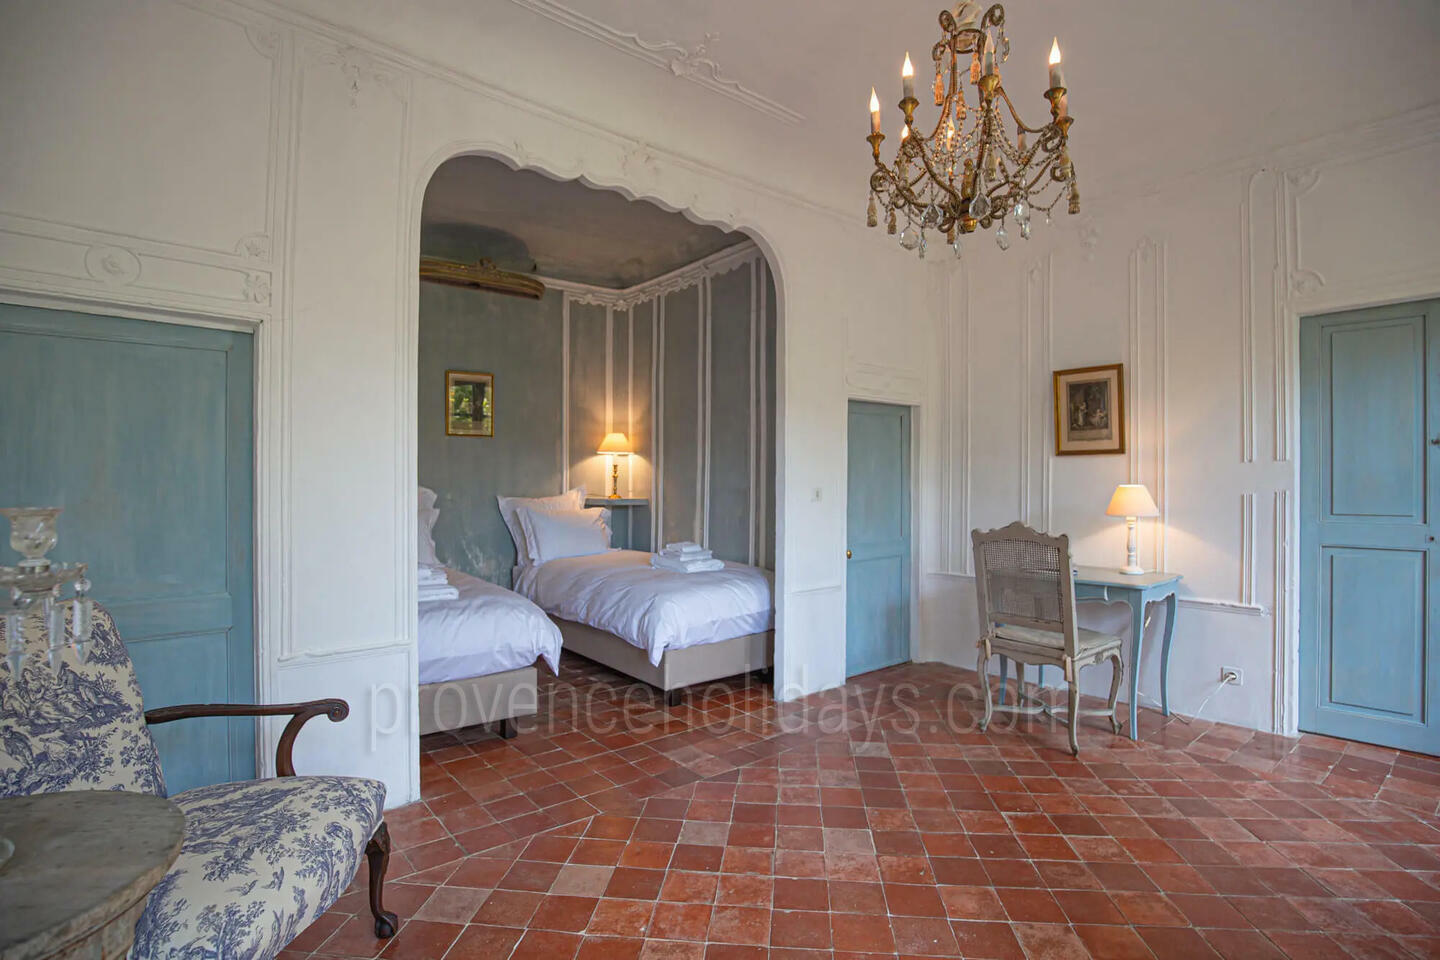 85 - Château de Gignac: Villa: Interior